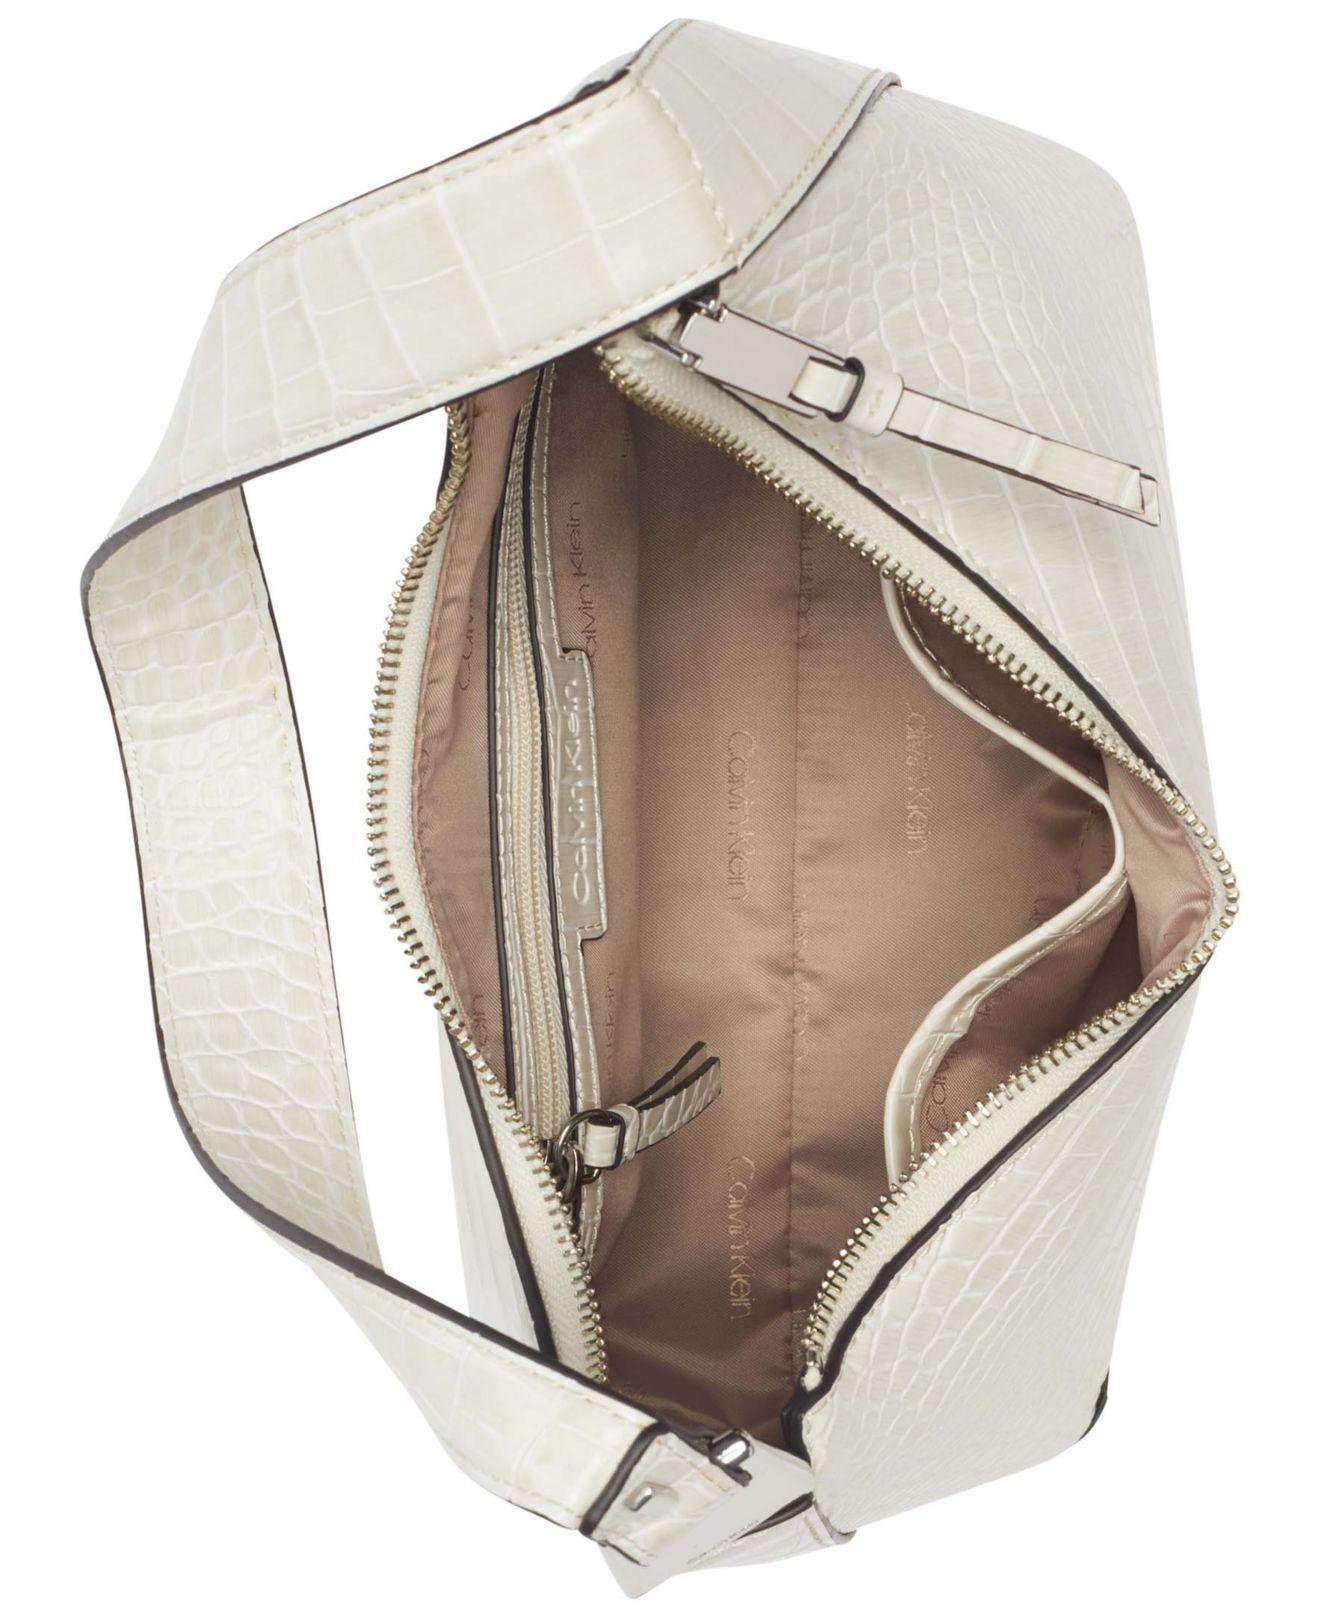 Calvin Klein Women's Holly Top Zip Shoulder Bag, Black Croco, One Size:  : Fashion